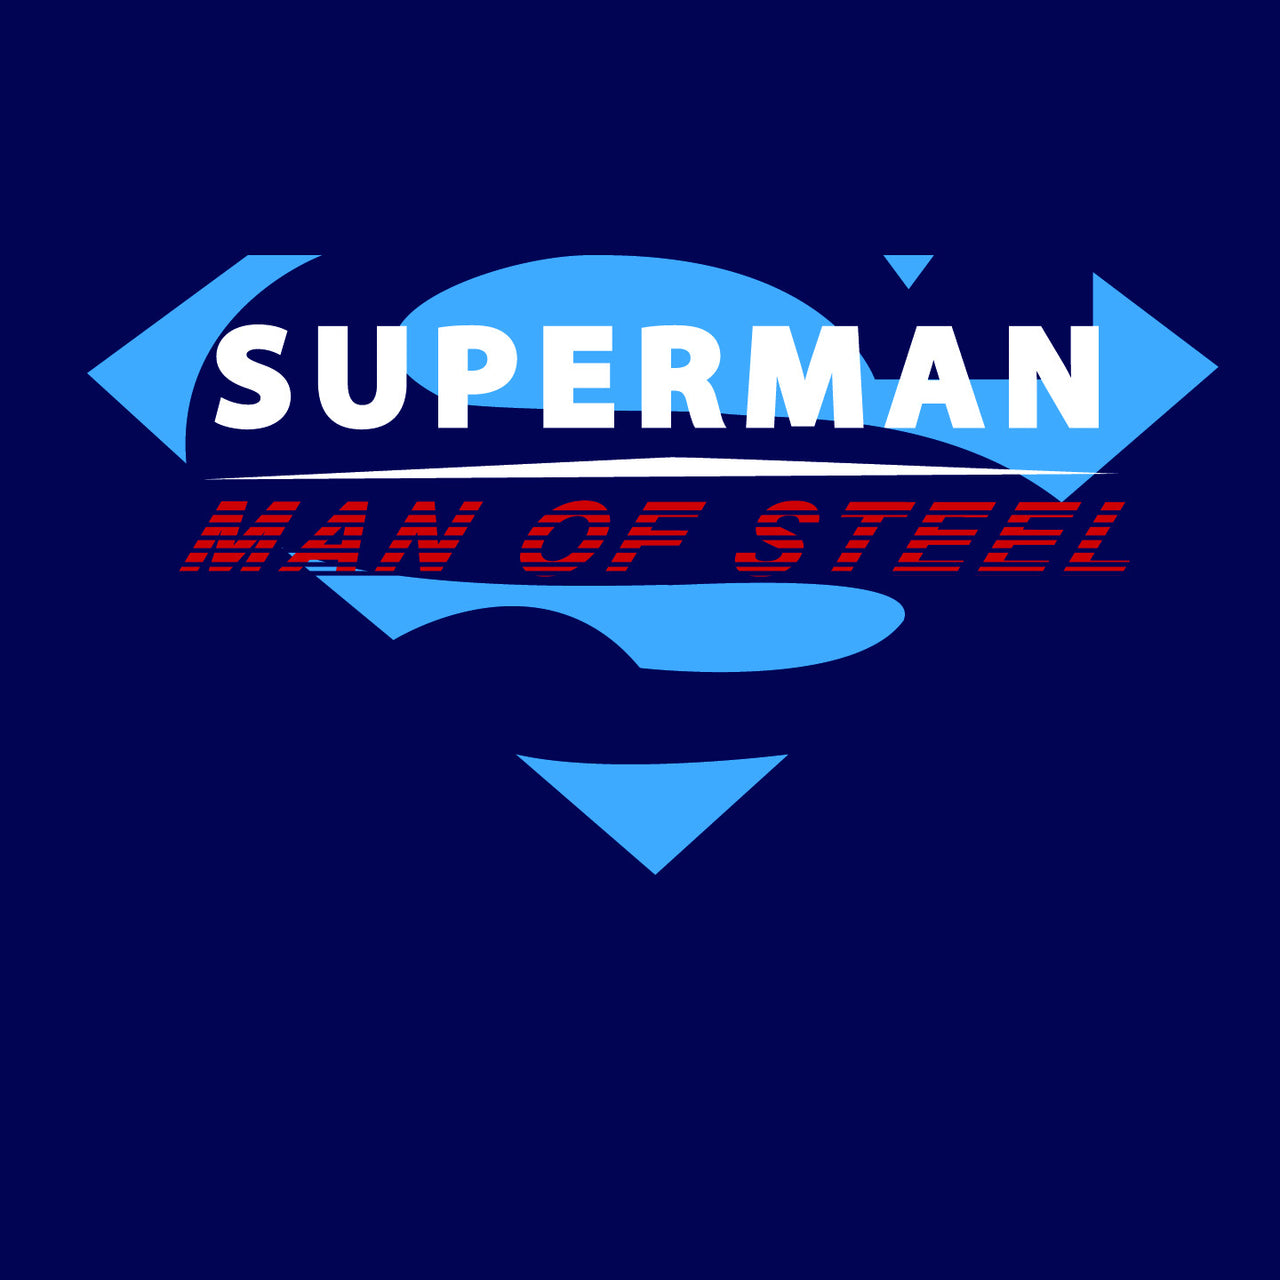 Superman Man Of Steel Logo on Blue Tank Top for Women - TshirtNow.net - 2